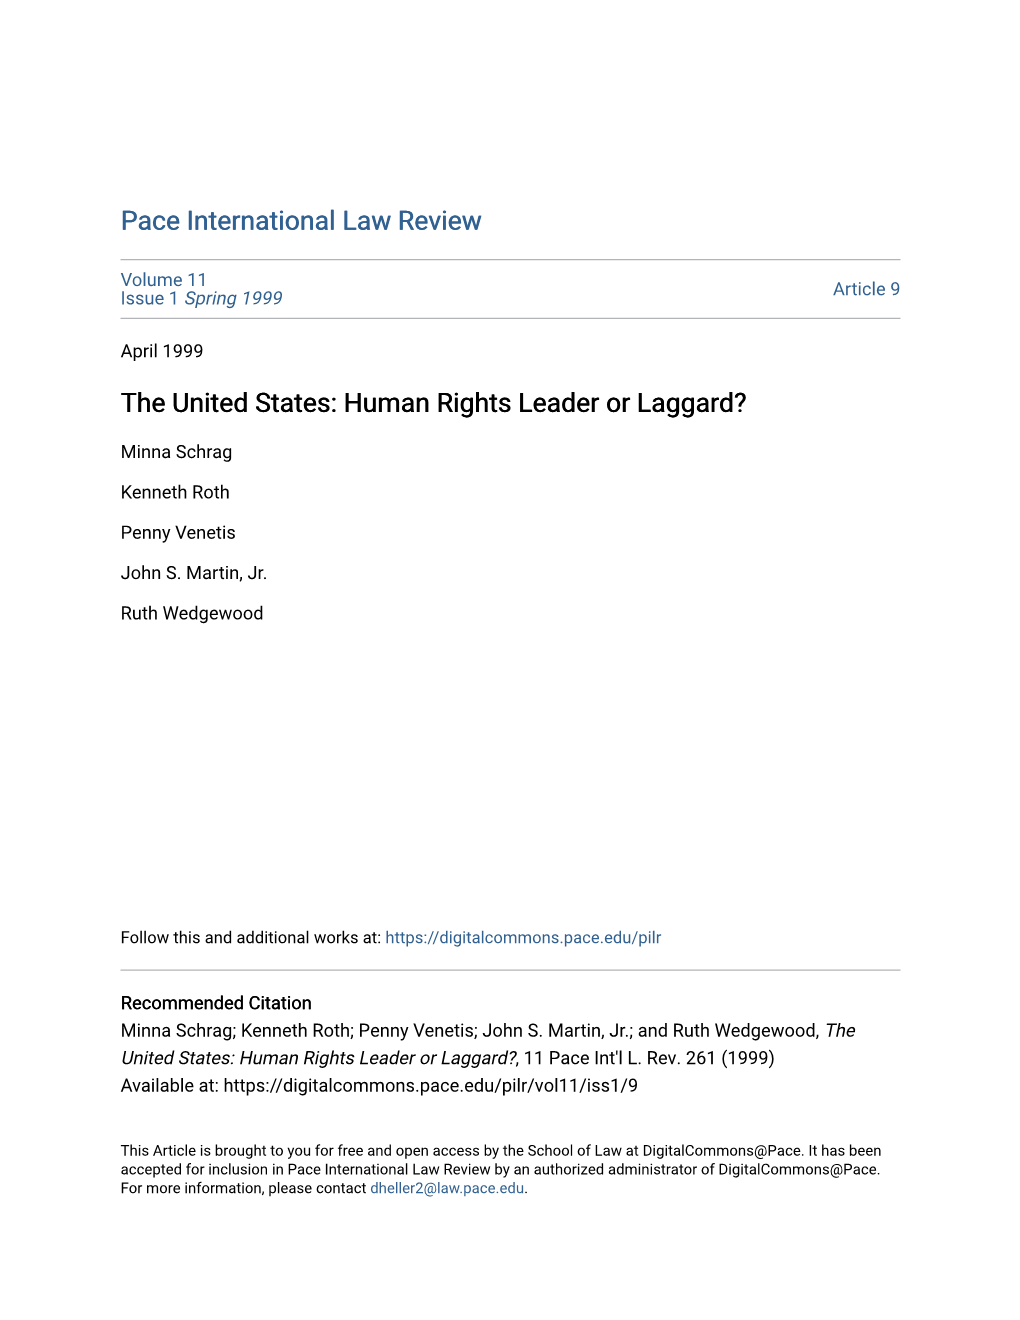 Human Rights Leader Or Laggard?